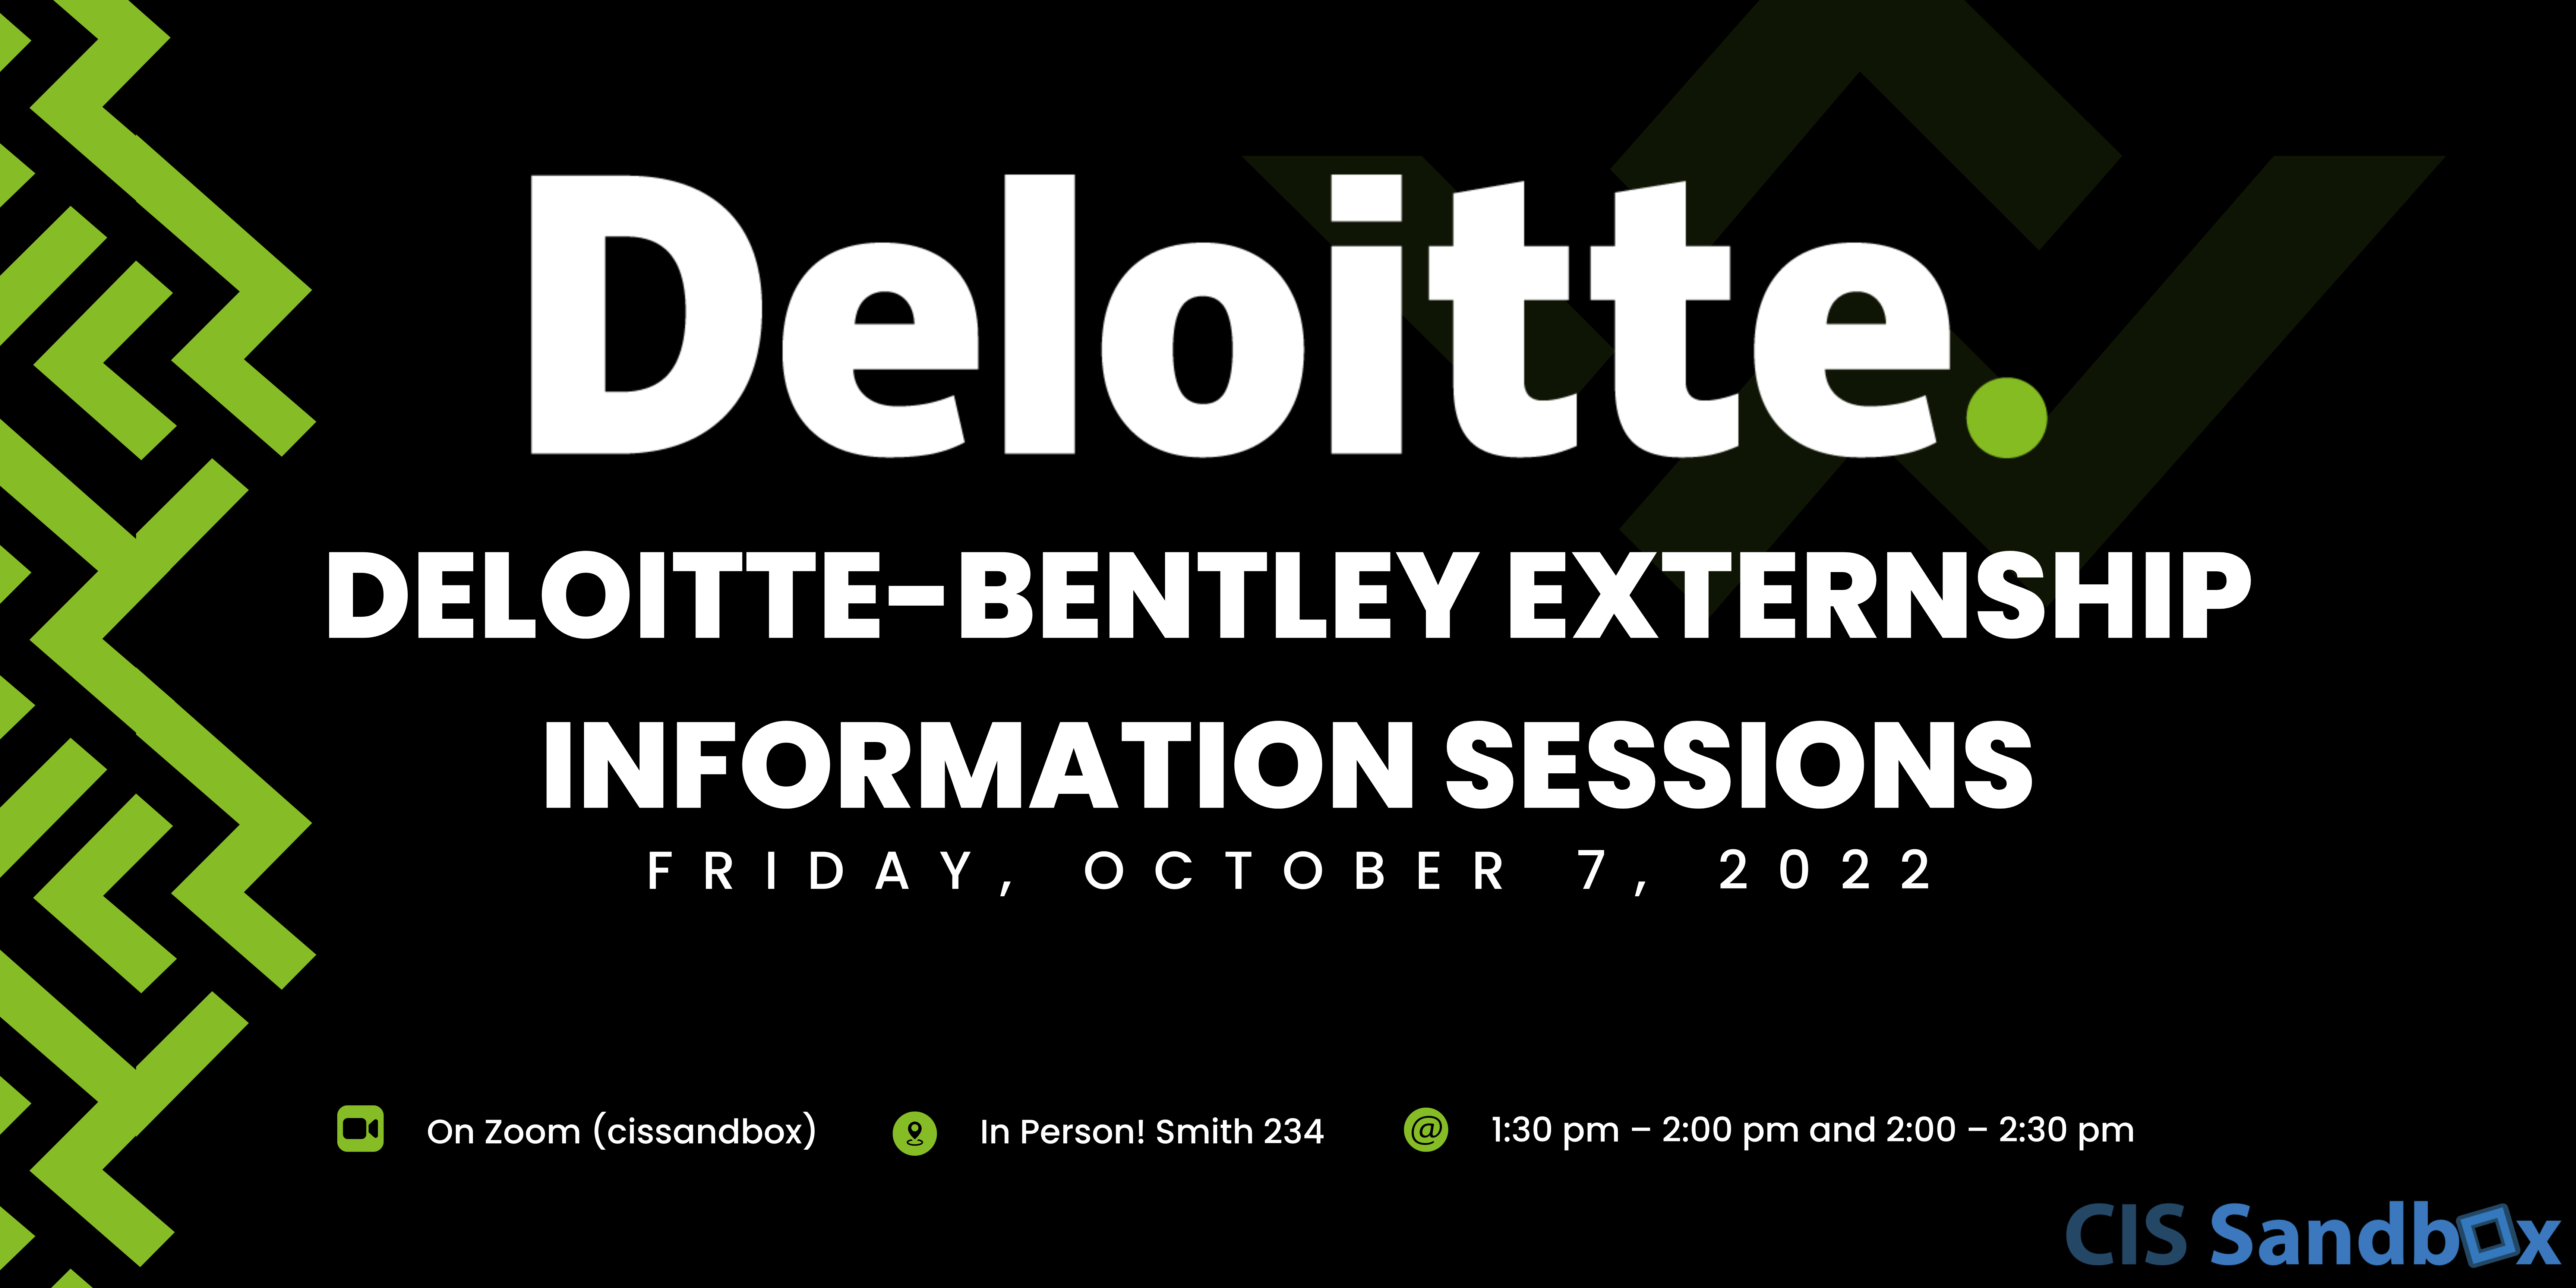 Deloitte_Bentley_Externship_Information_Sessions1